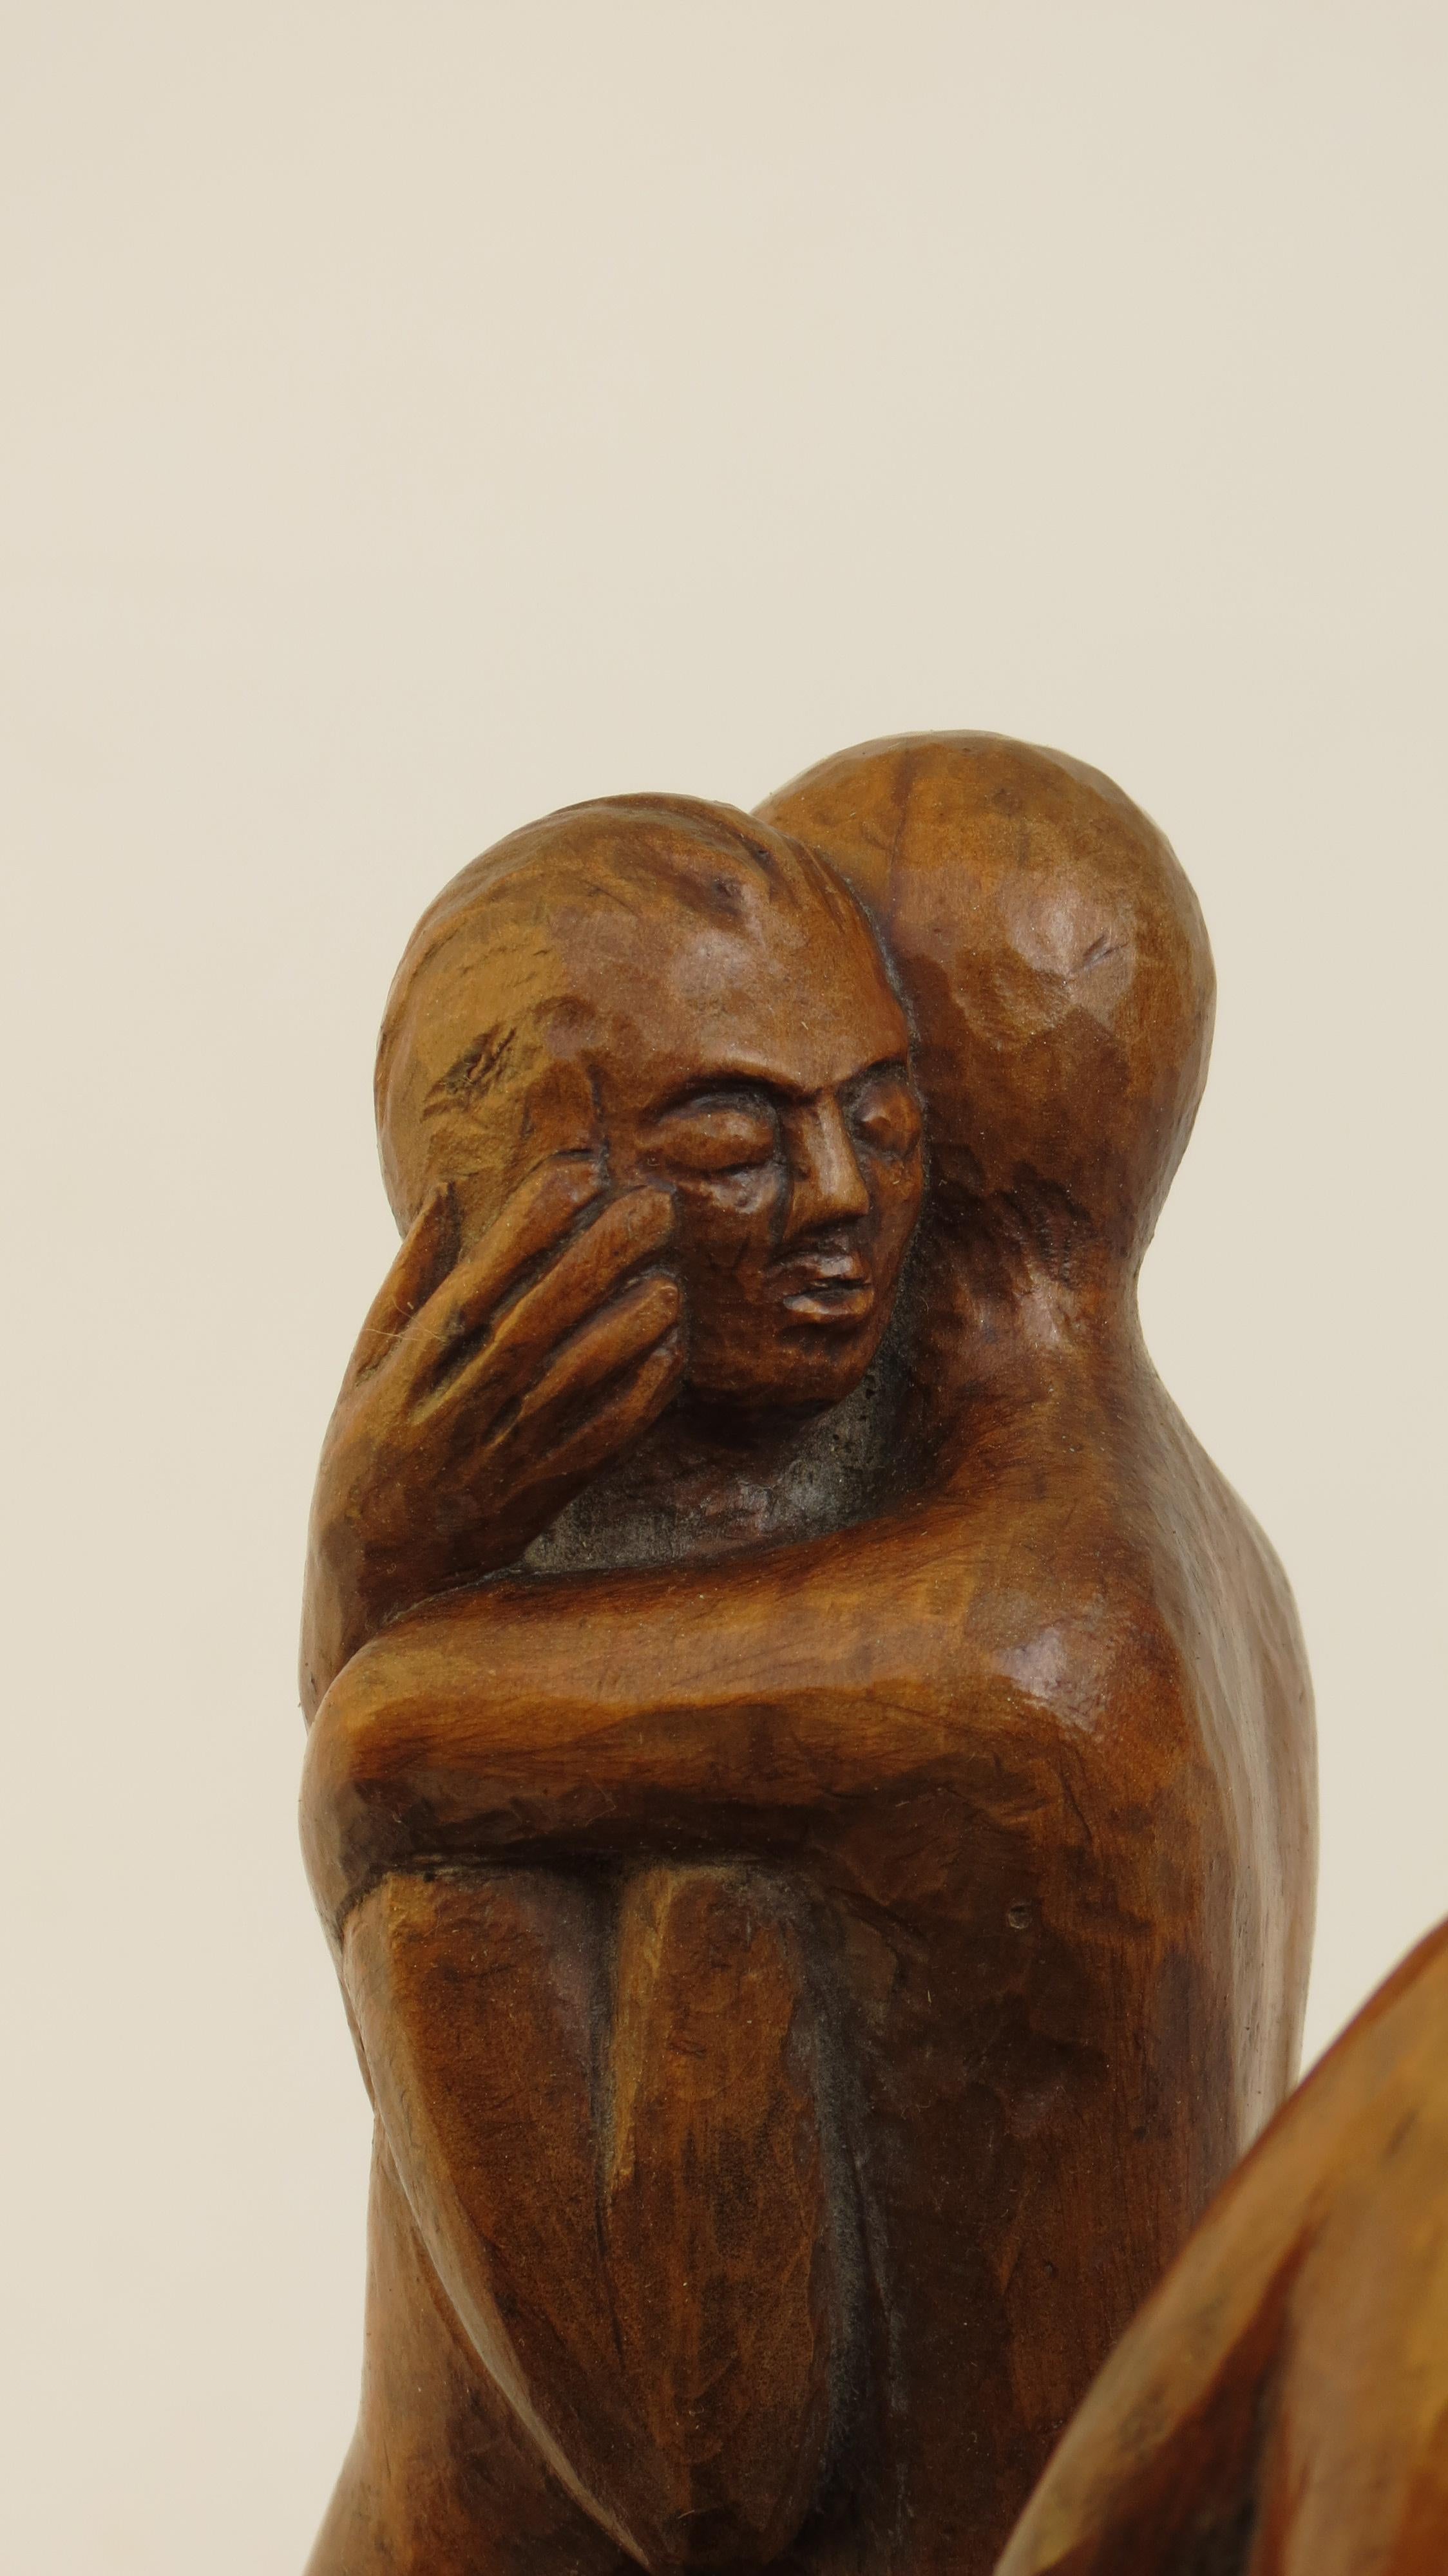 Hand-Carved 1971 Sculpture in Lime Wood by Thomas de la Berthauche